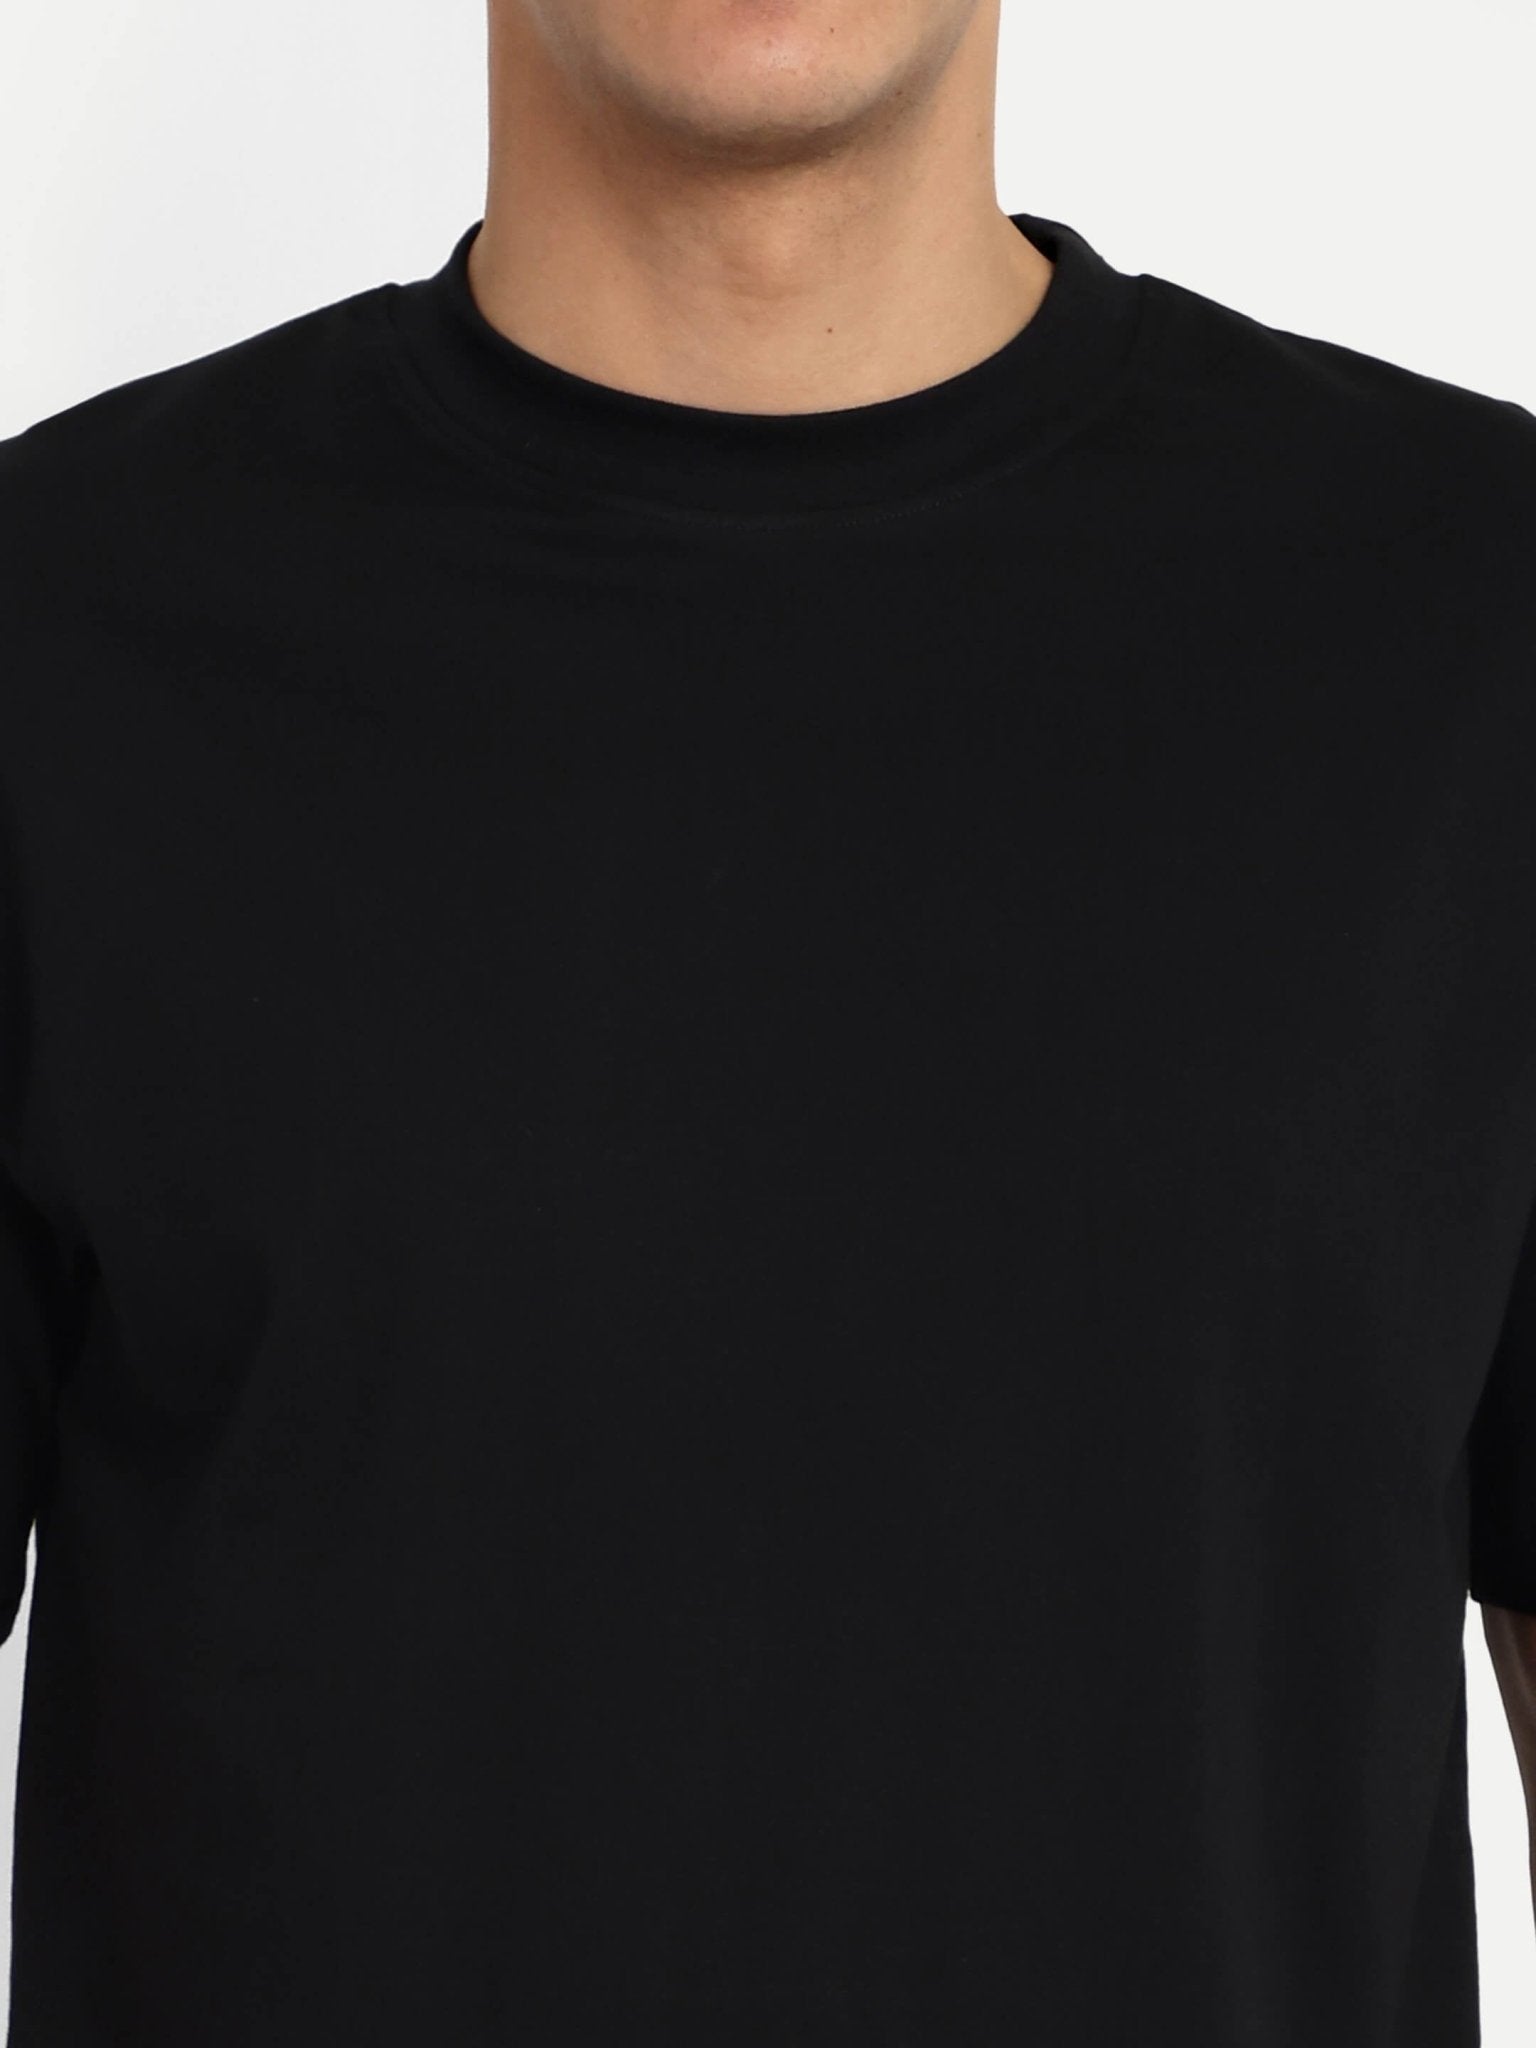 Relaxed Basic T-Shirt - Black